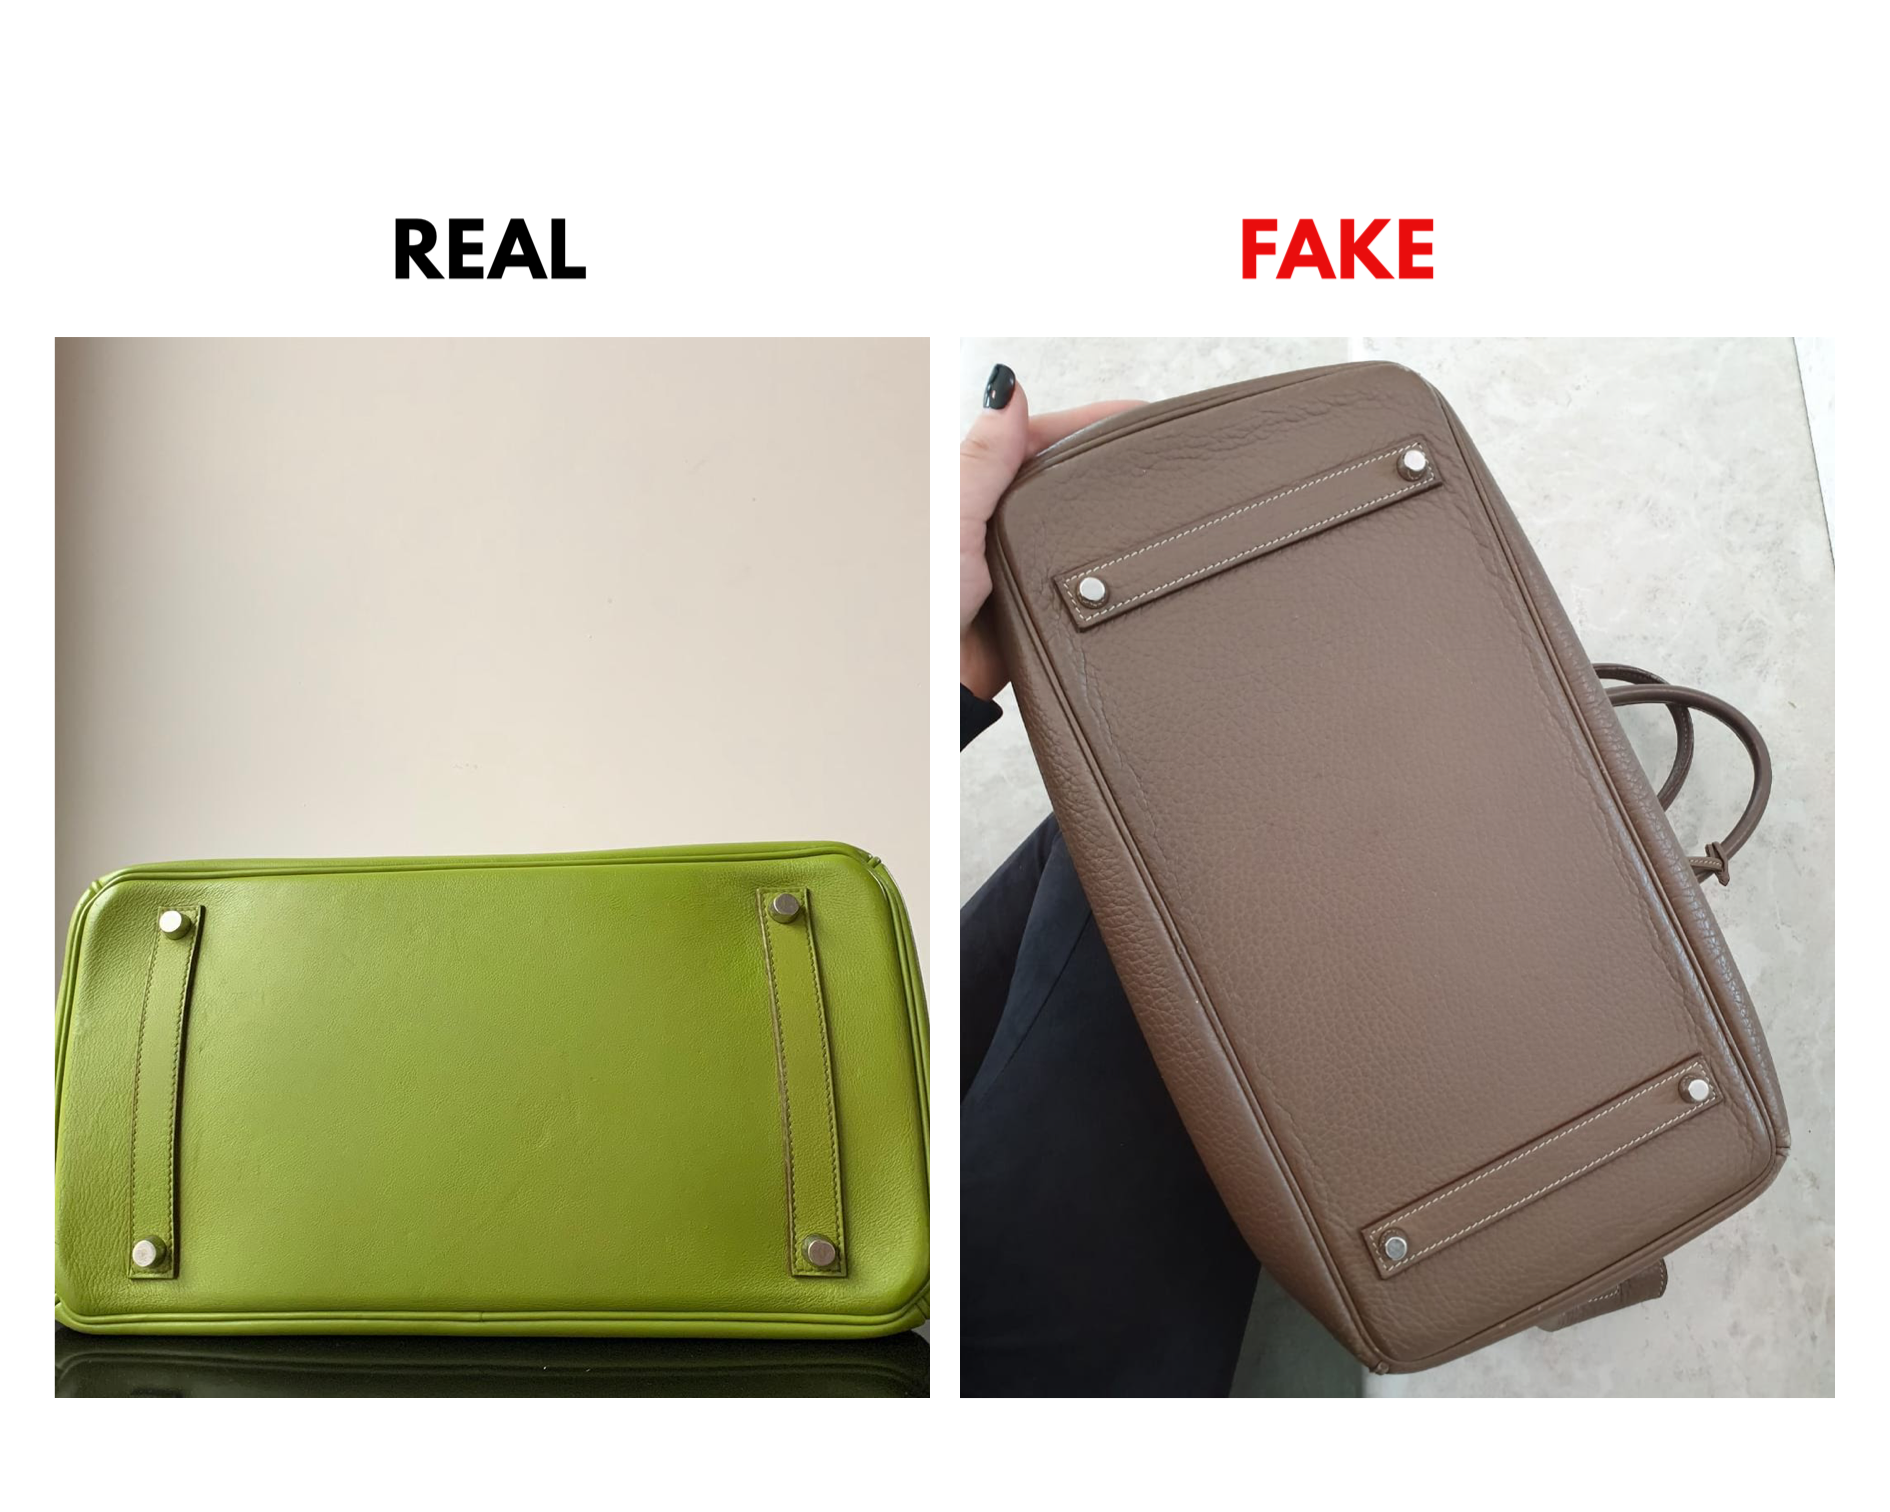 Real VS Fake Hermes Birkin Bag! How to authenticate & spot fake Hermes  Birkin 25, 30, 35 (Bagsho) 